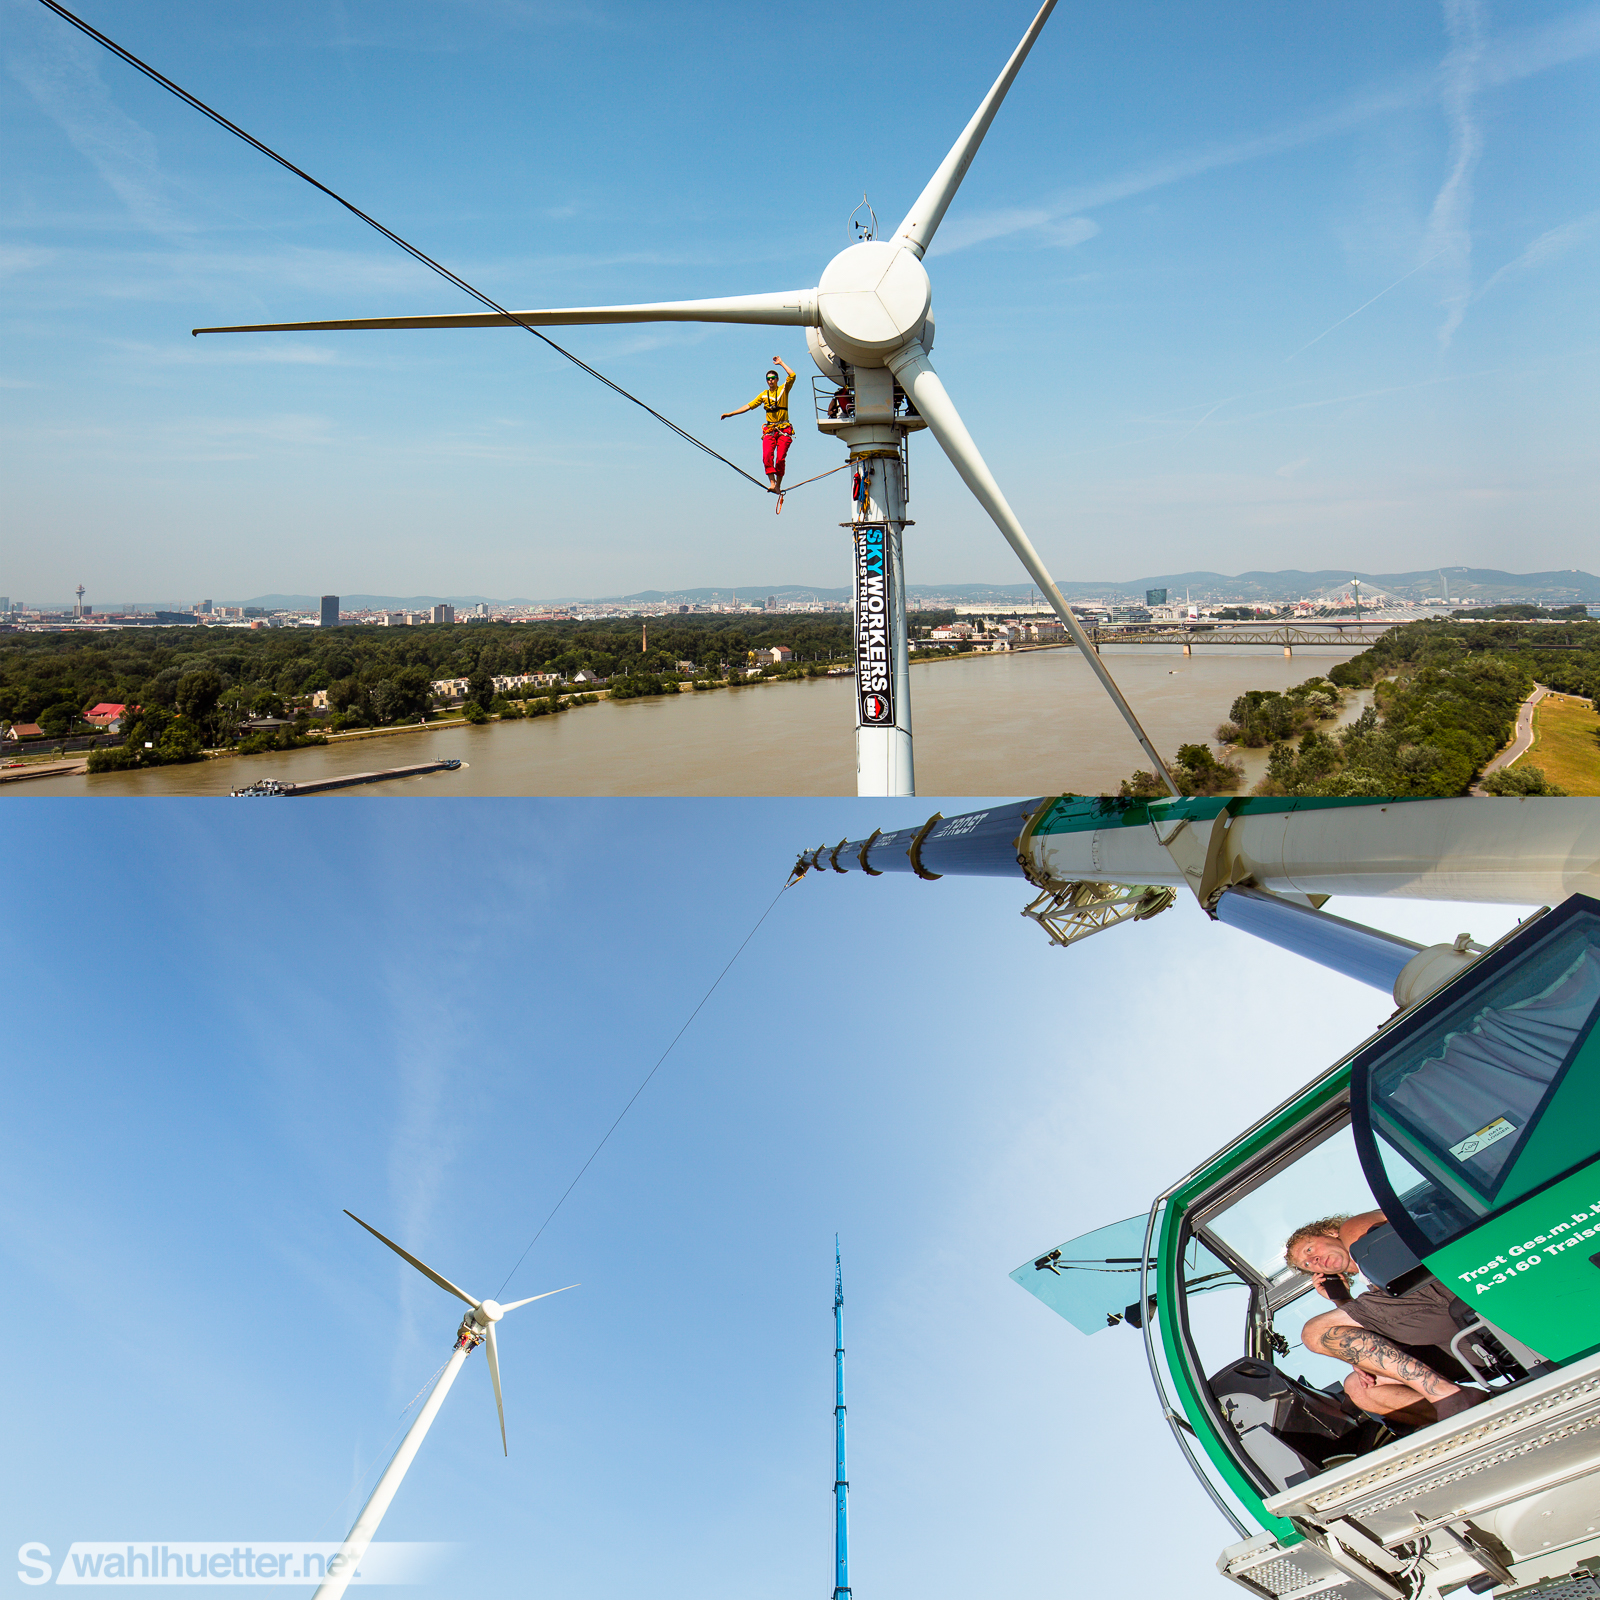 Wind Turbine Highline | Peter Auer | Vienna | www.wahlhuetter.net